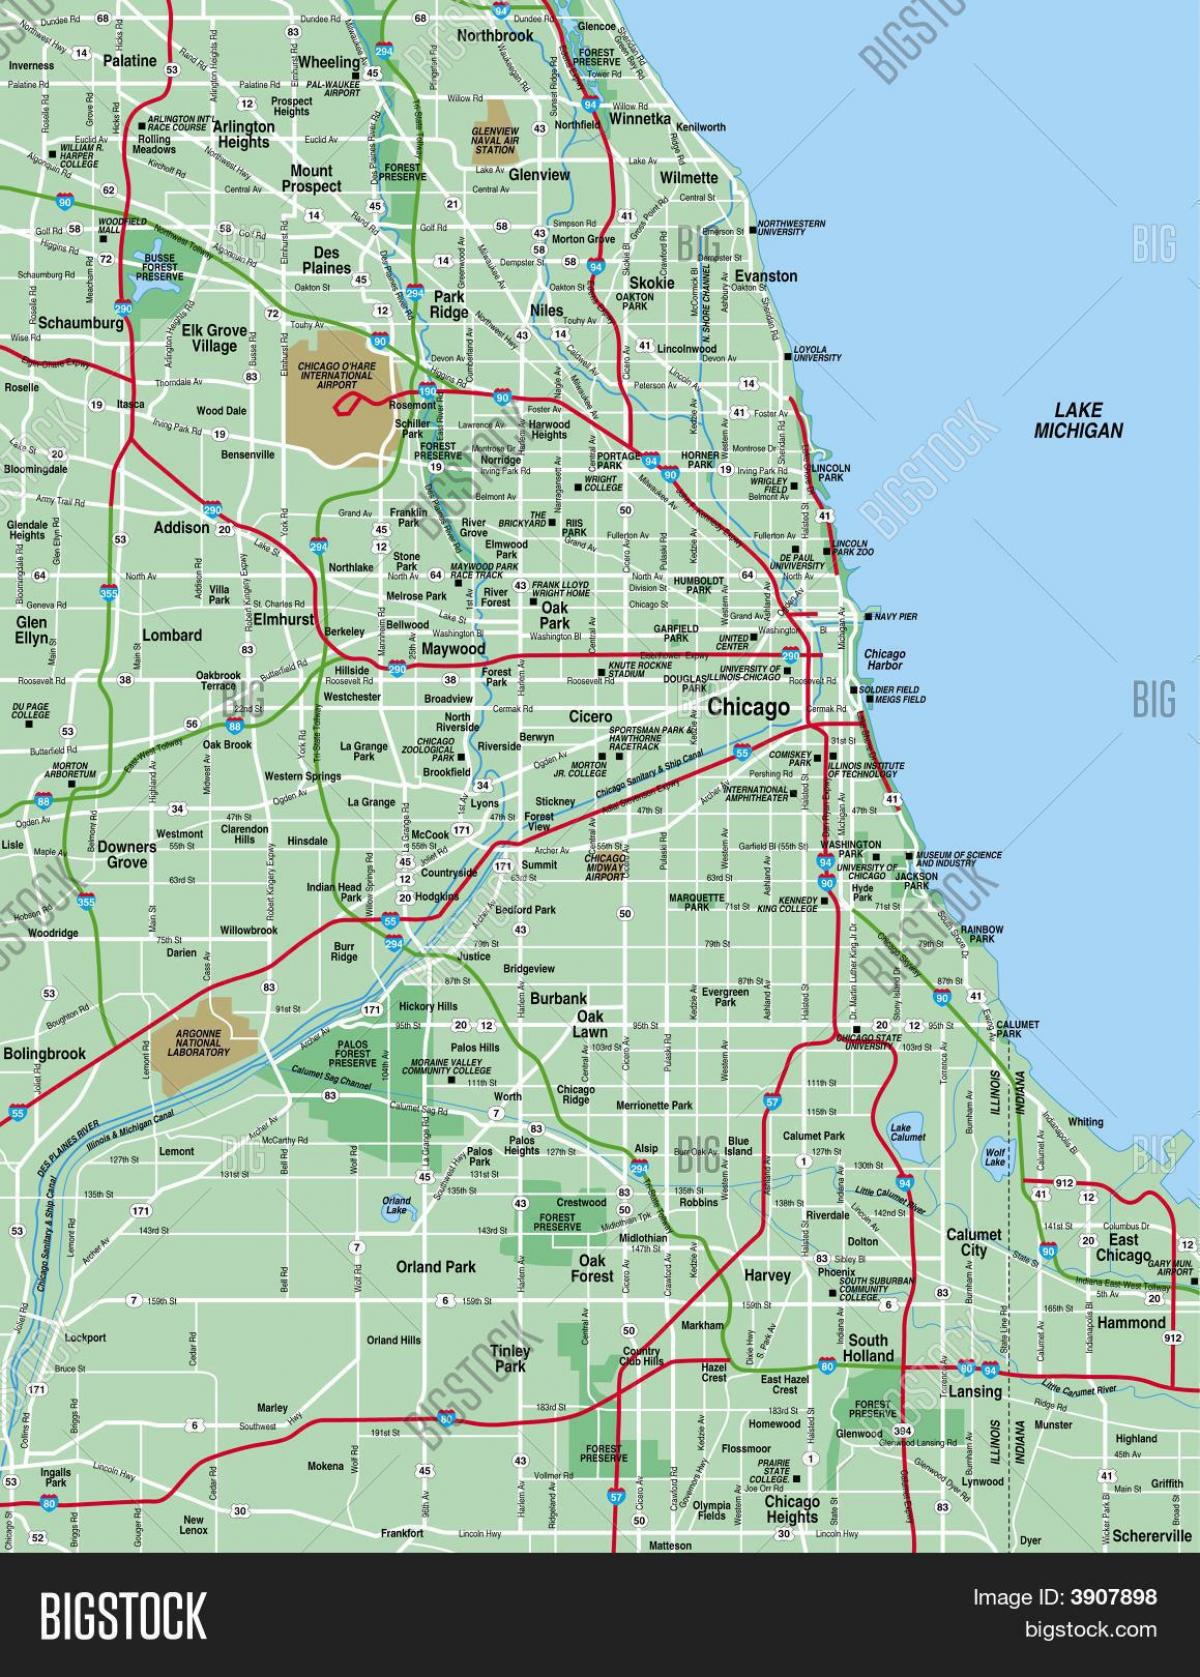 mapu Chicago area